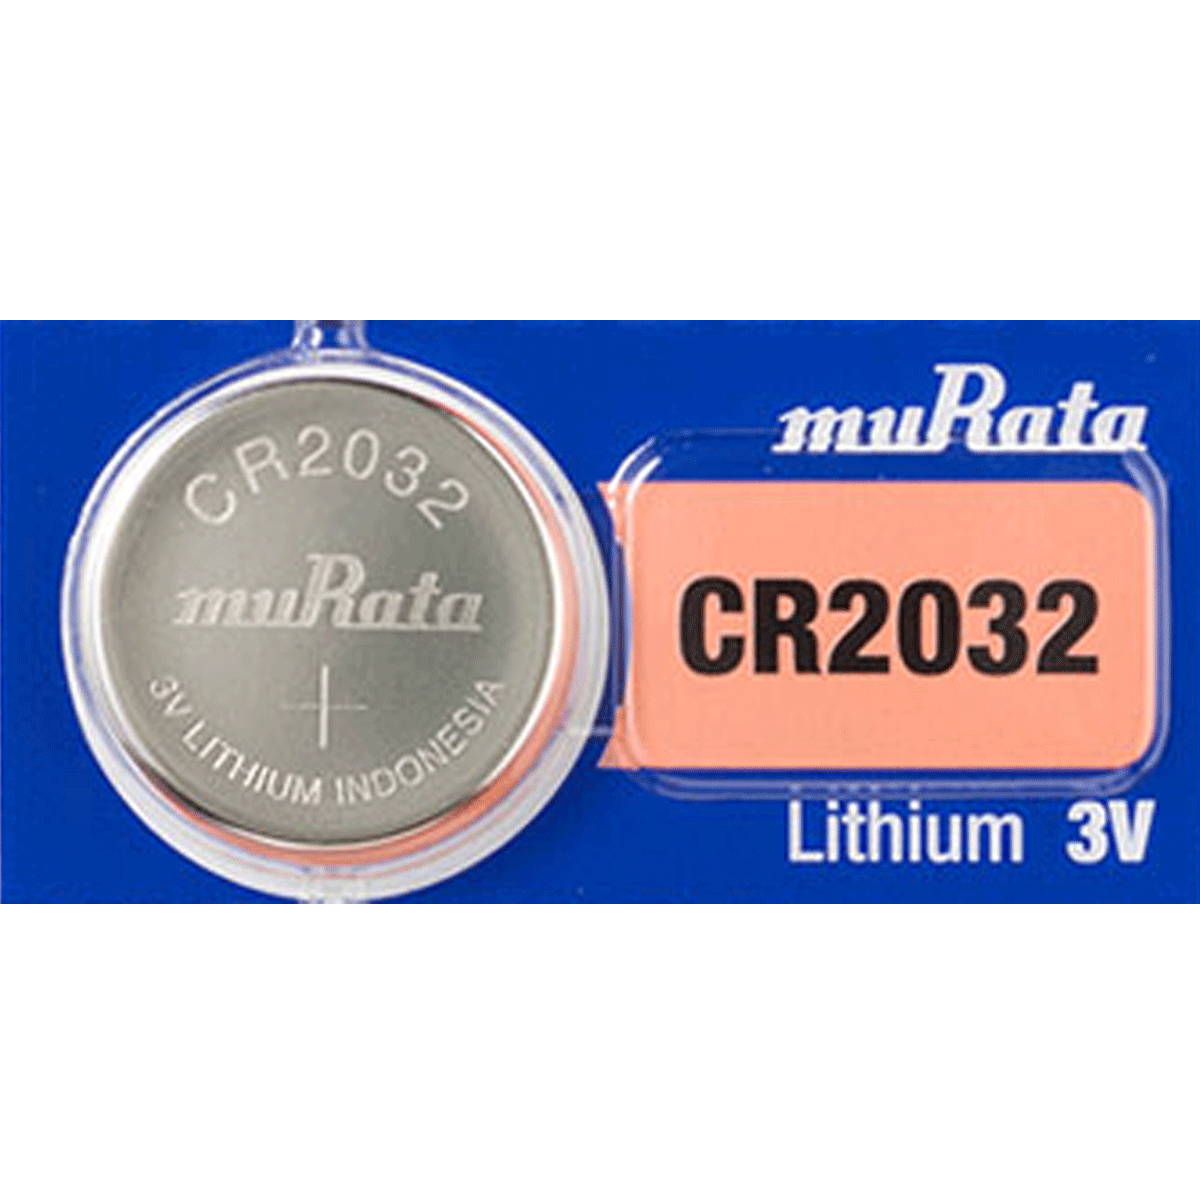 Renata CR2032 Battery 3V Lithium Coin Cell (1 pc.)